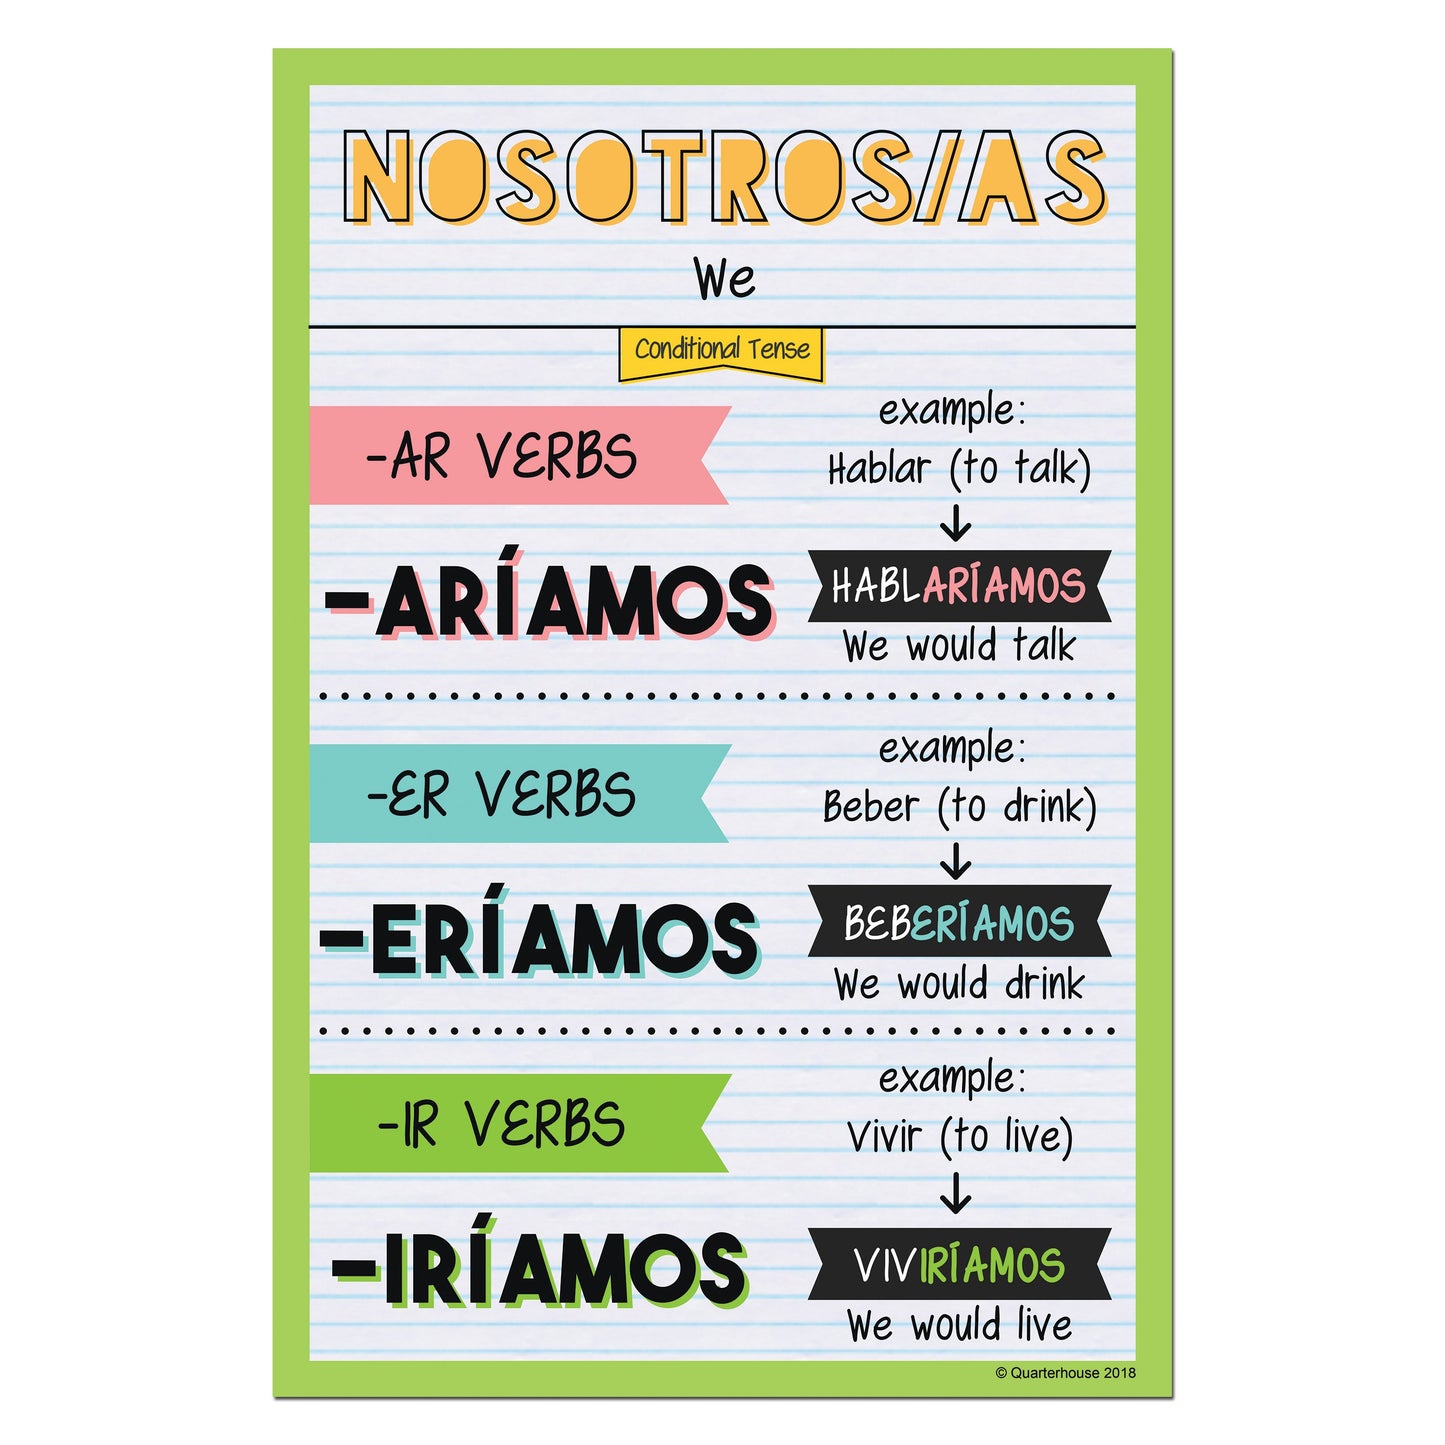 Quarterhouse Nosotros - Conditional Tense Spanish Verb Conjugation Poster, Spanish and ESL Classroom Materials for Teachers